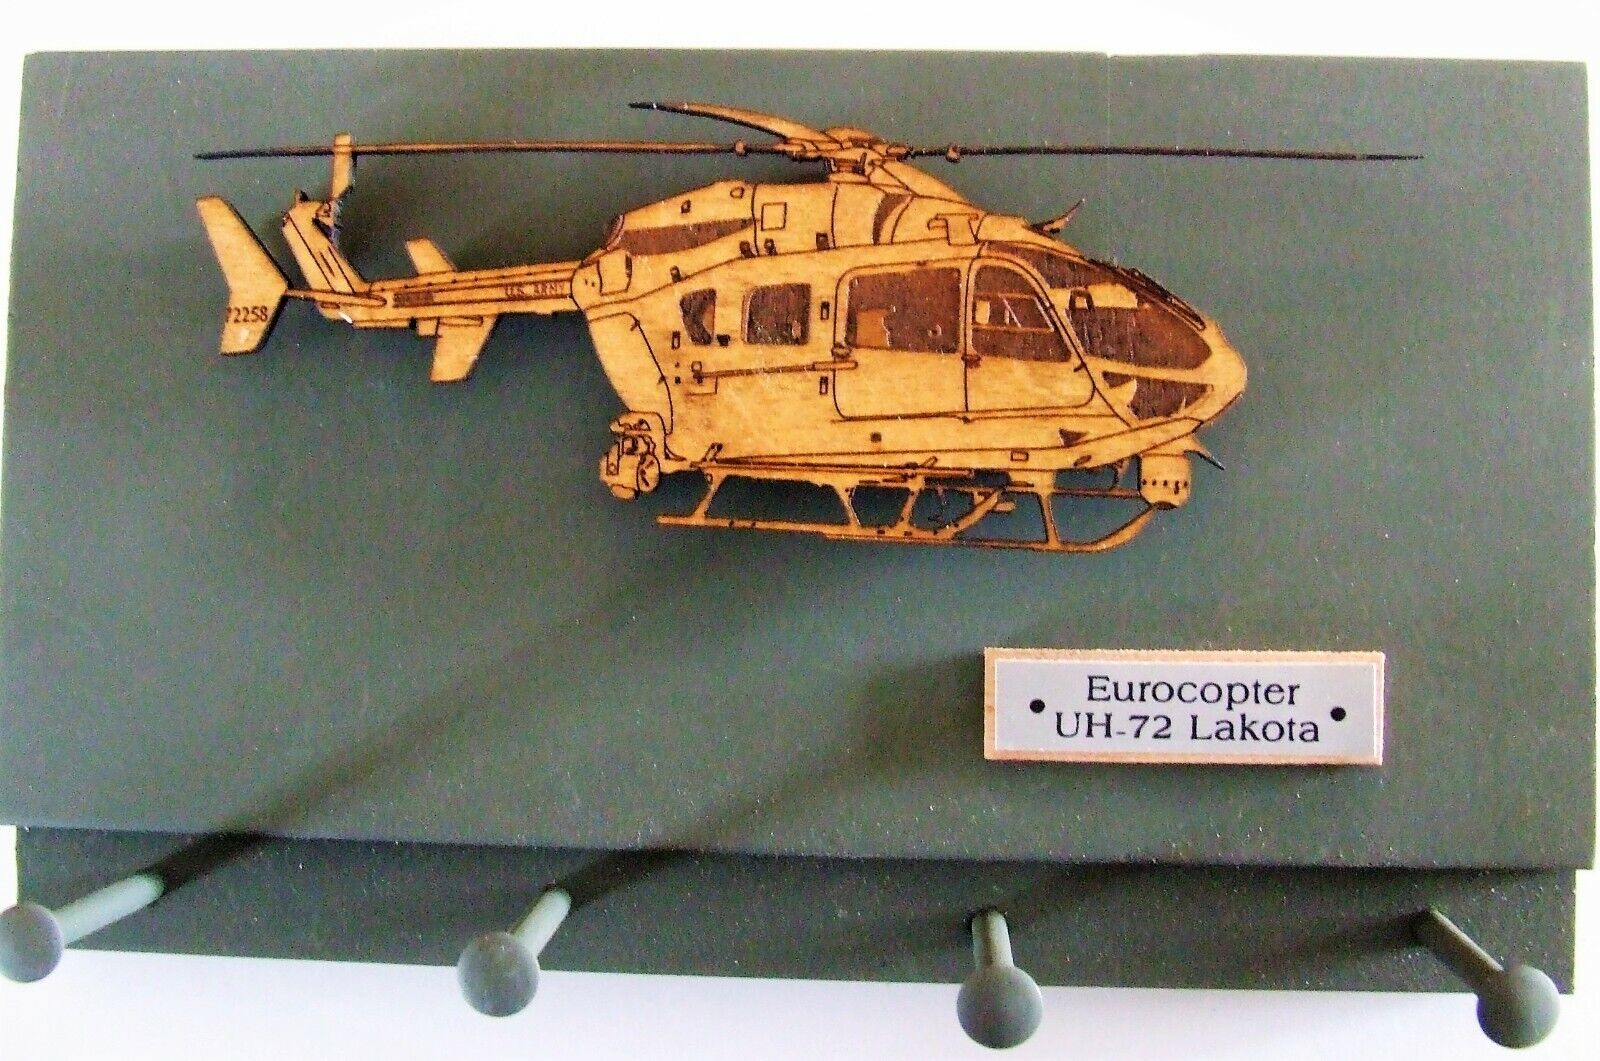 U.S. Military Eurocopter (Airbus) UH-72 Lakota Helicopter Keychain Display Rack